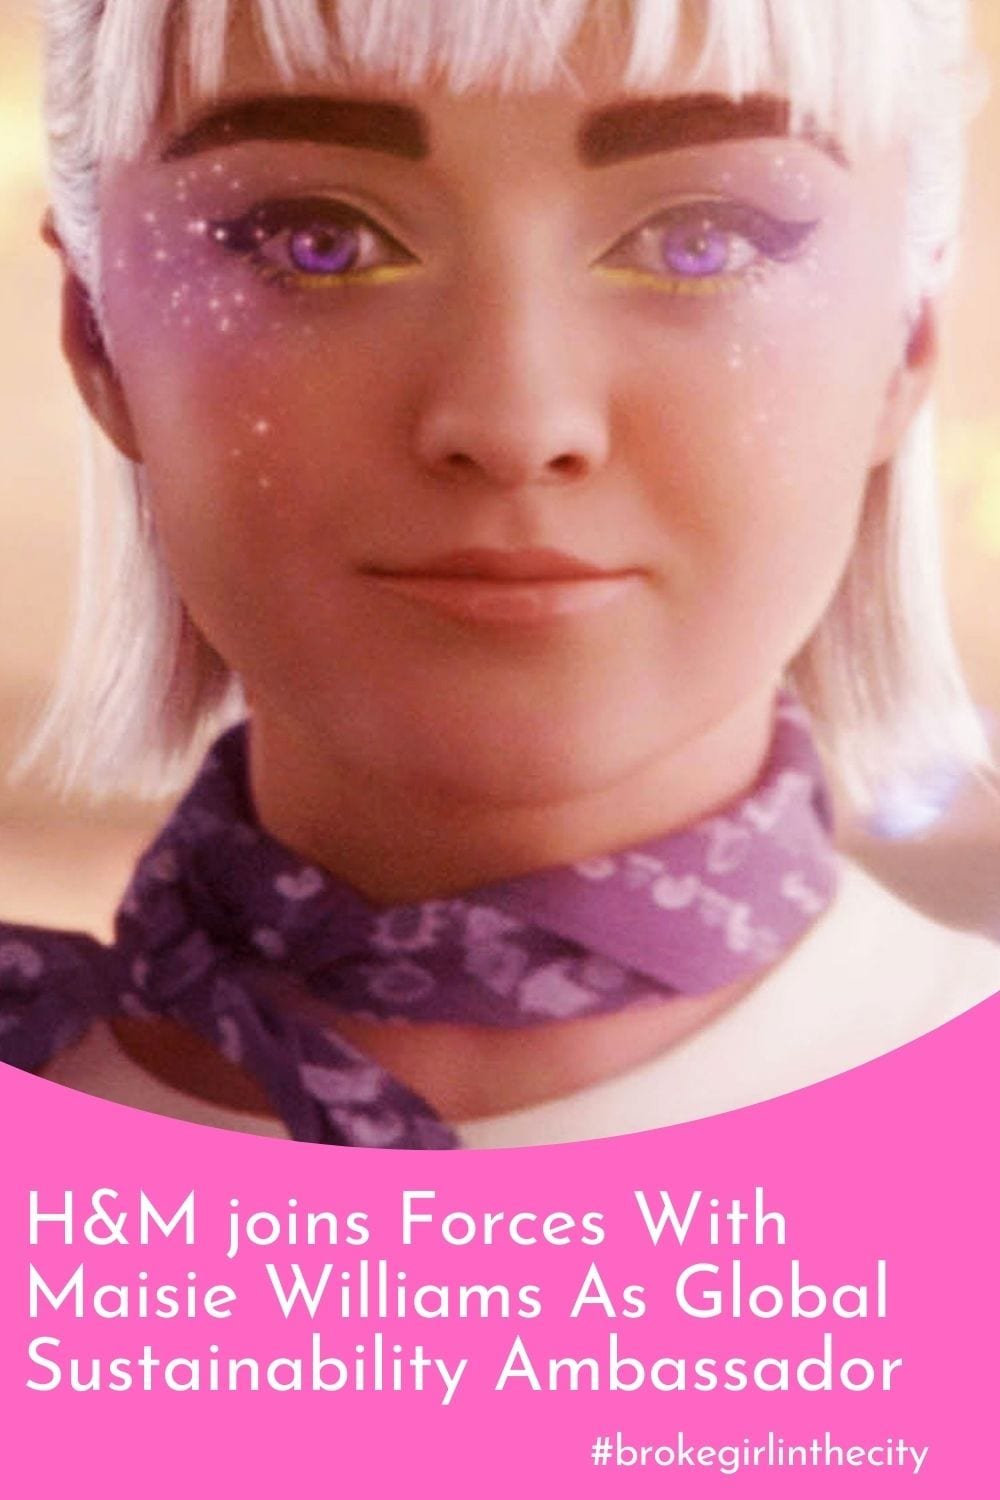 Maisie Williams named H&M Global Sustainability Ambassador